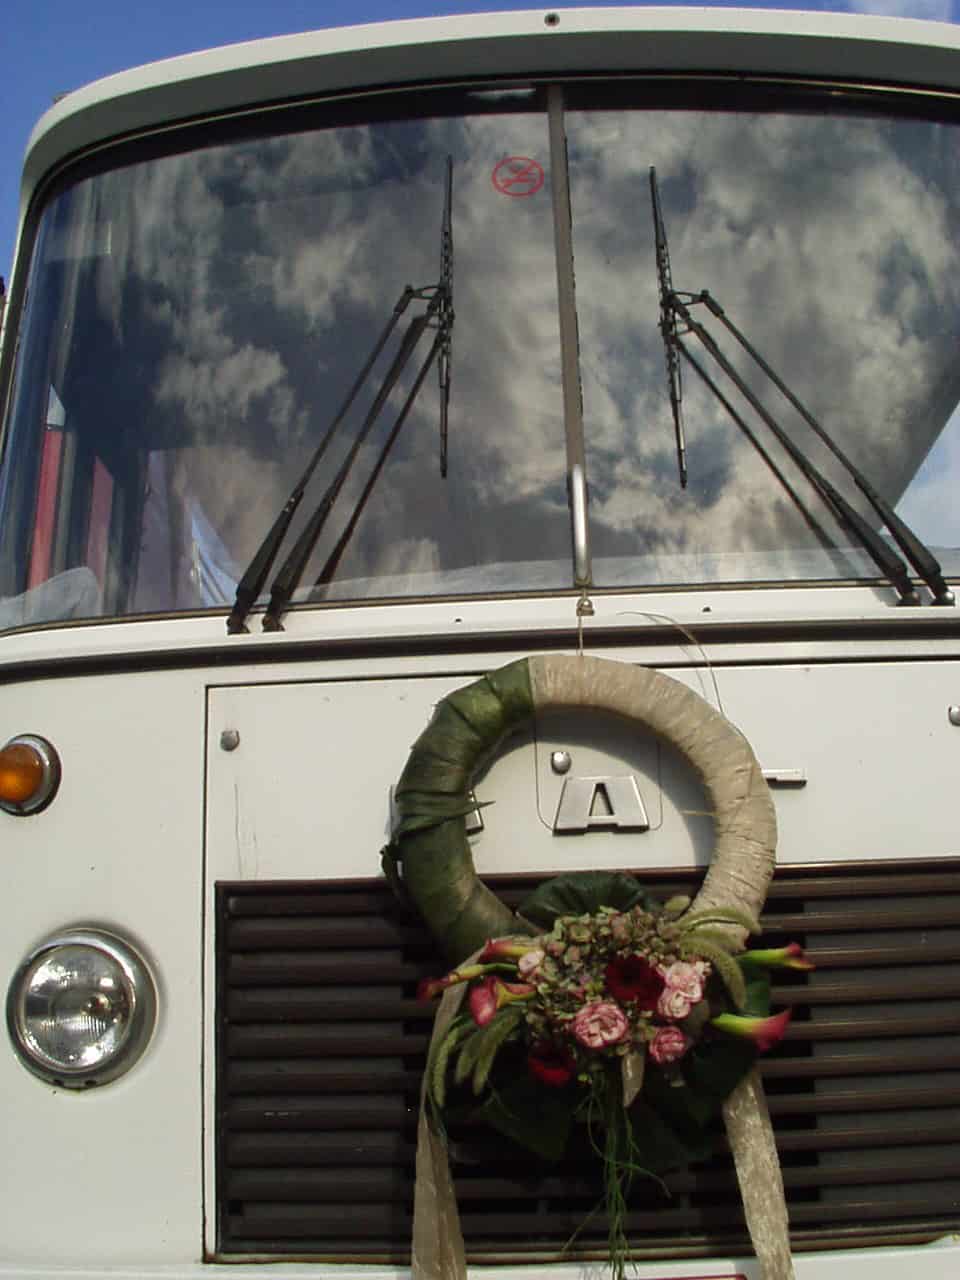 witte DAF-bus van 1981 ceremoniebus met gezellig saloninterieur